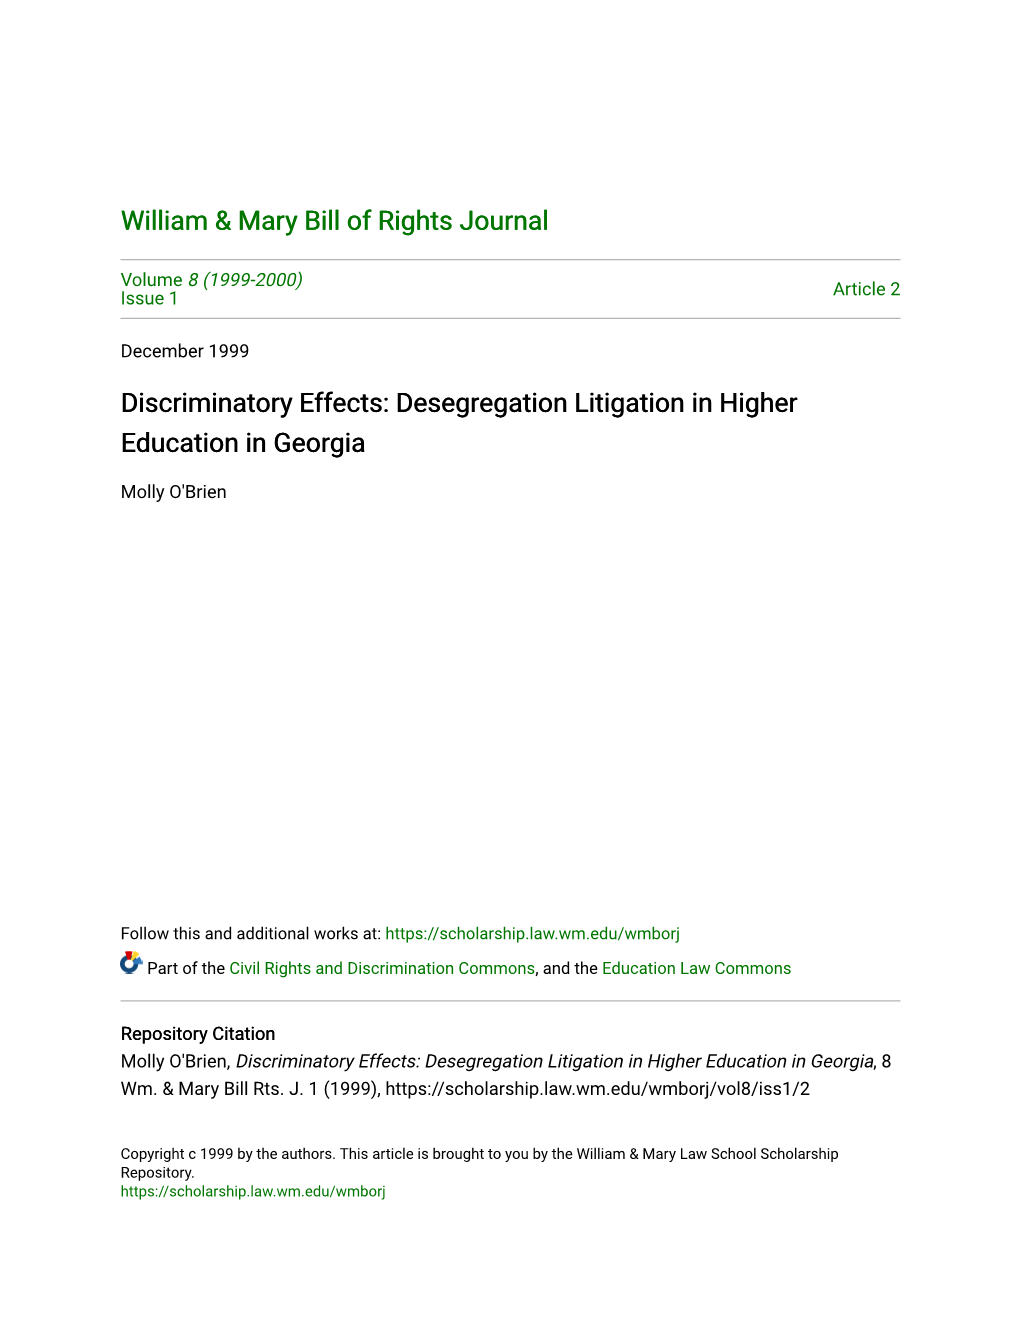 Discriminatory Effects: Desegregation Litigation in Higher Education in Georgia